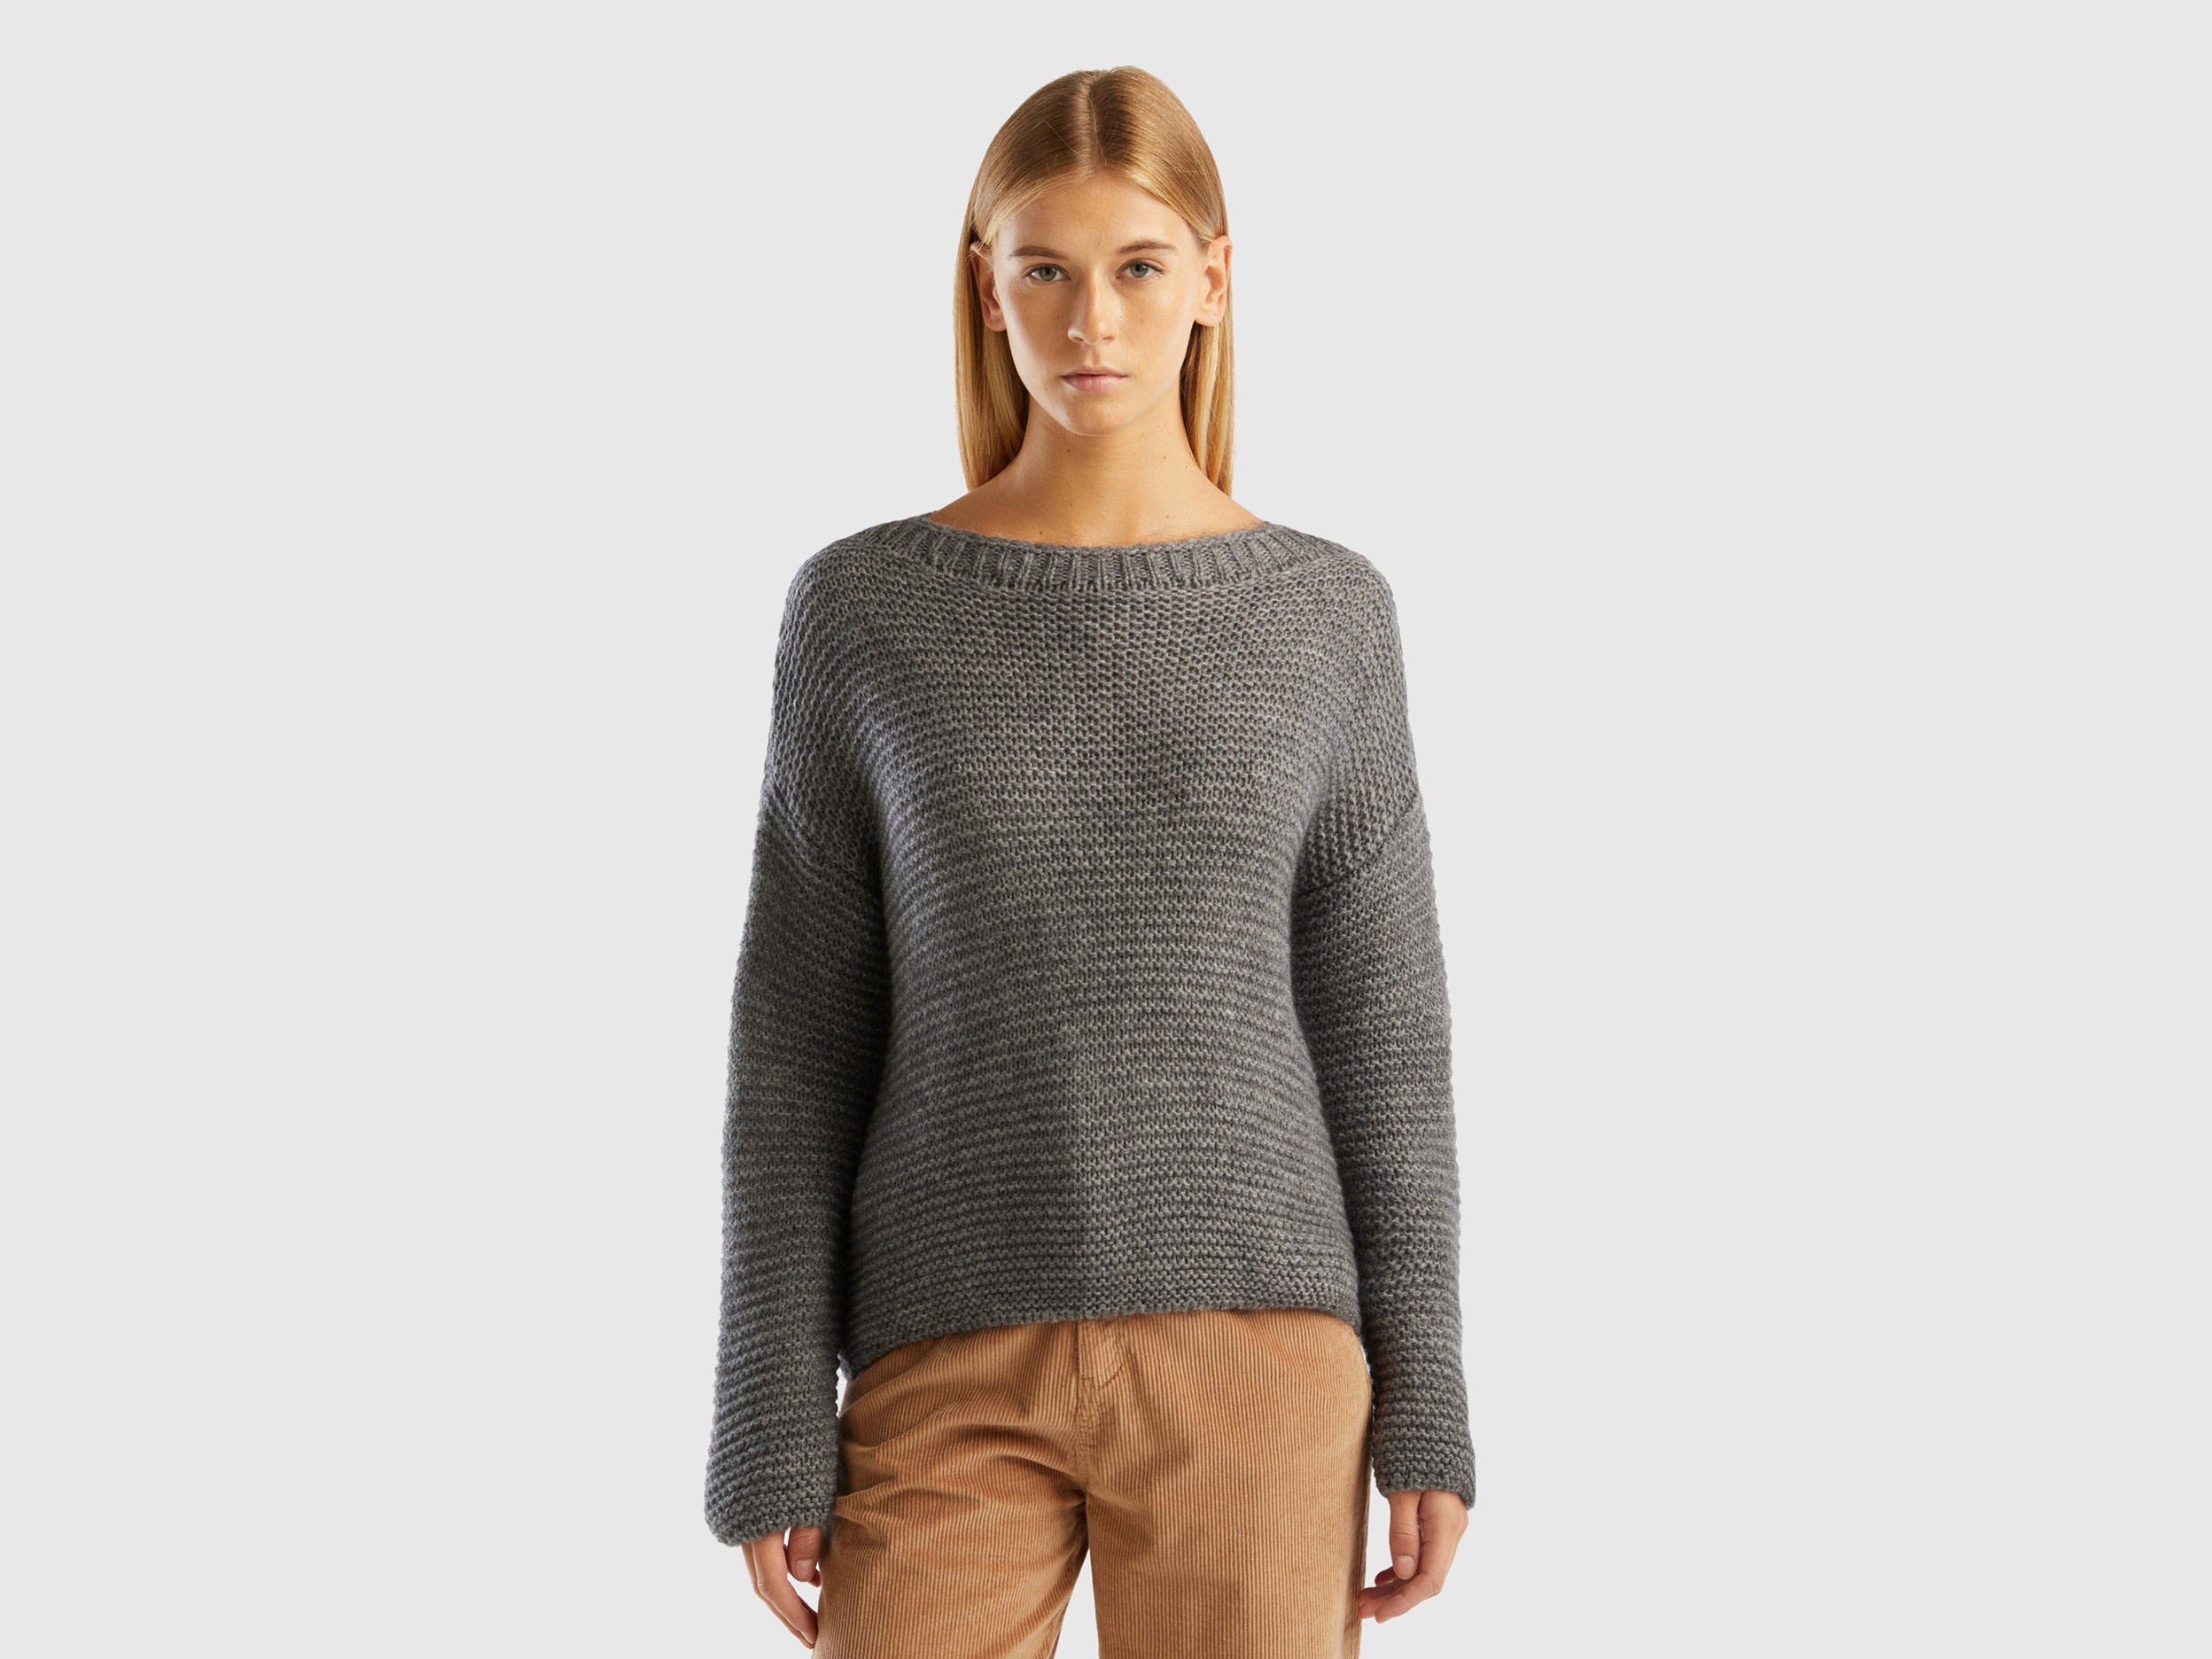 Benetton, Boat Neck Sweater, size M, Dark Gray, Women